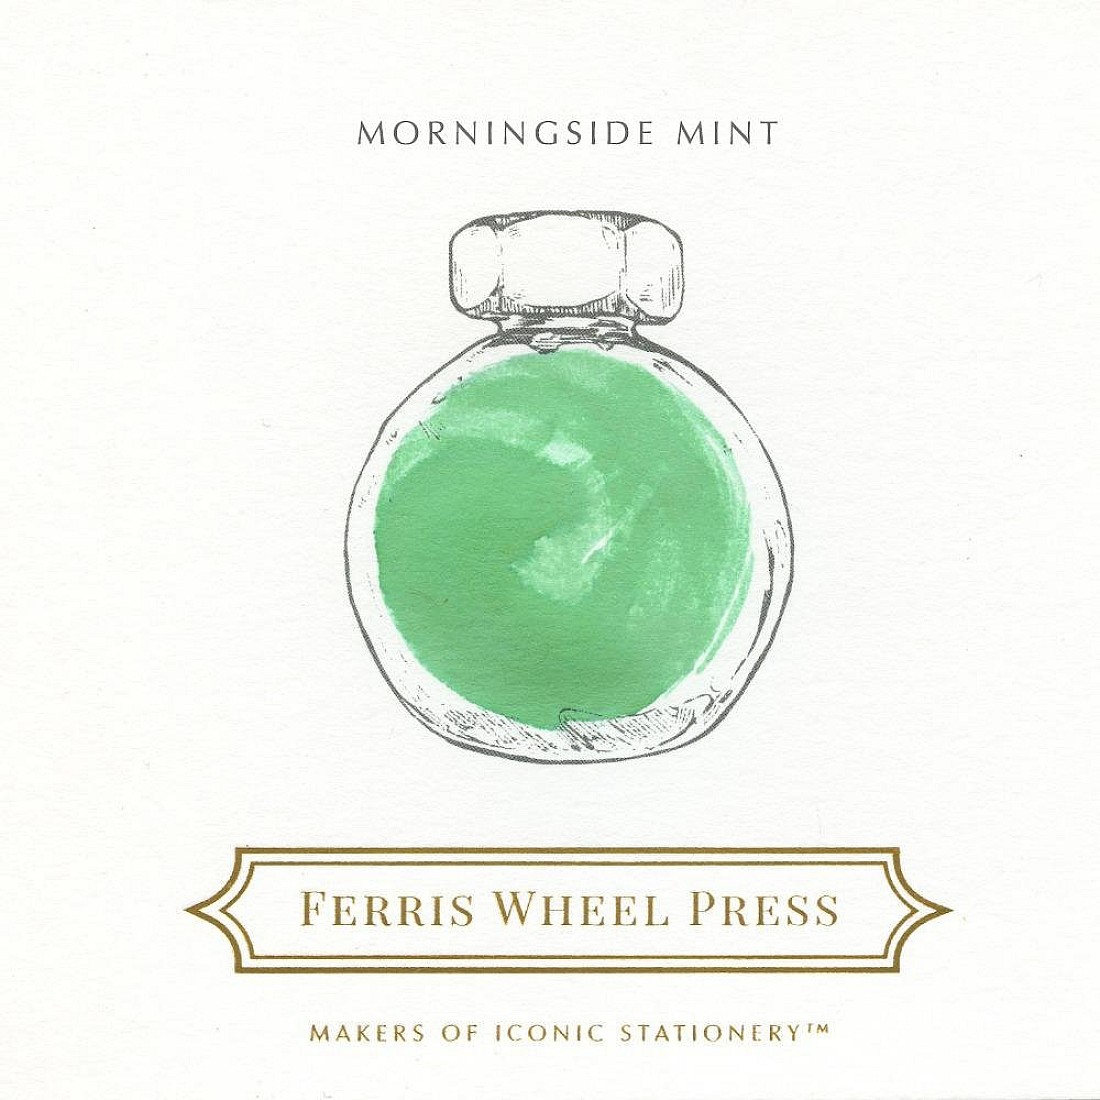 Ferris Wheel Press Morningside Morningside Mint 85 ml Inkwell